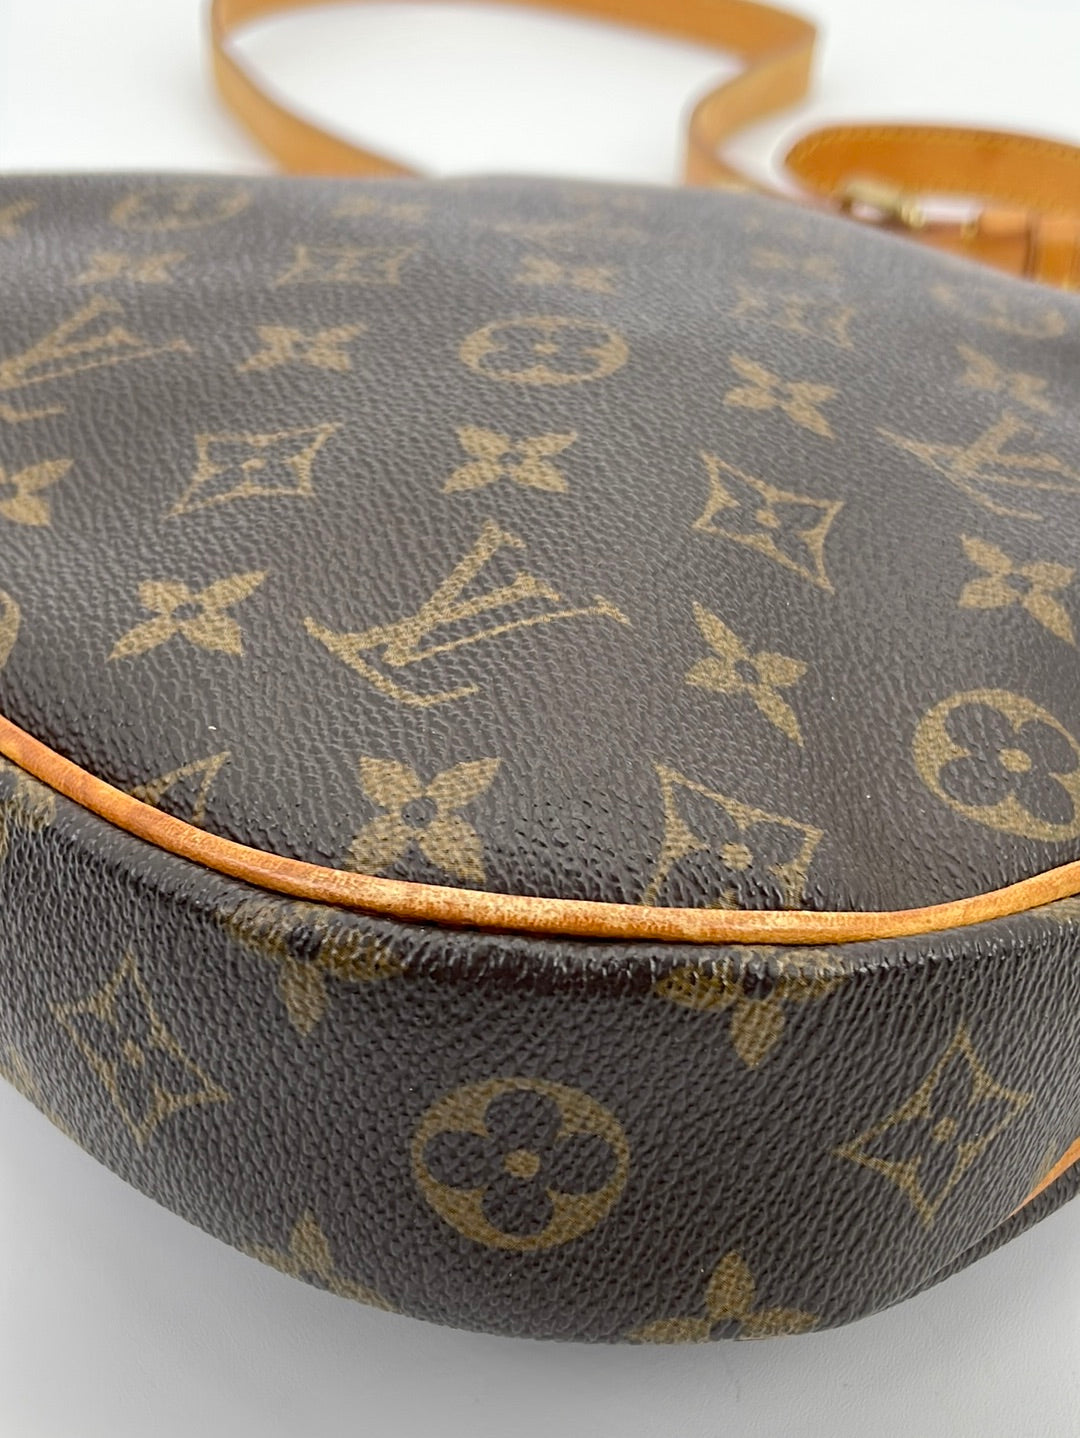 Louis Vuitton Vintage Monogram Saddle Bag